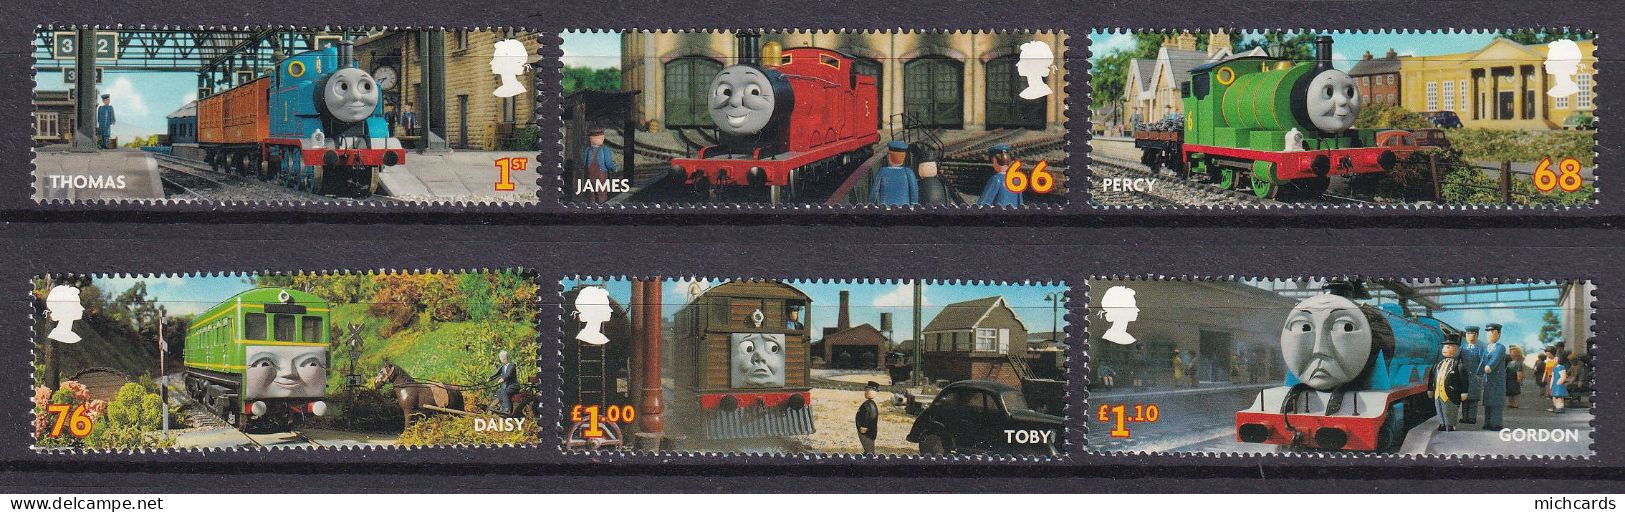 195 GRANDE BRETAGNE 2011 - Y&T 3499/504 - Dessin Anime Thomas Le Petit Train - Neuf ** (MNH) Sans Charniere - Unused Stamps